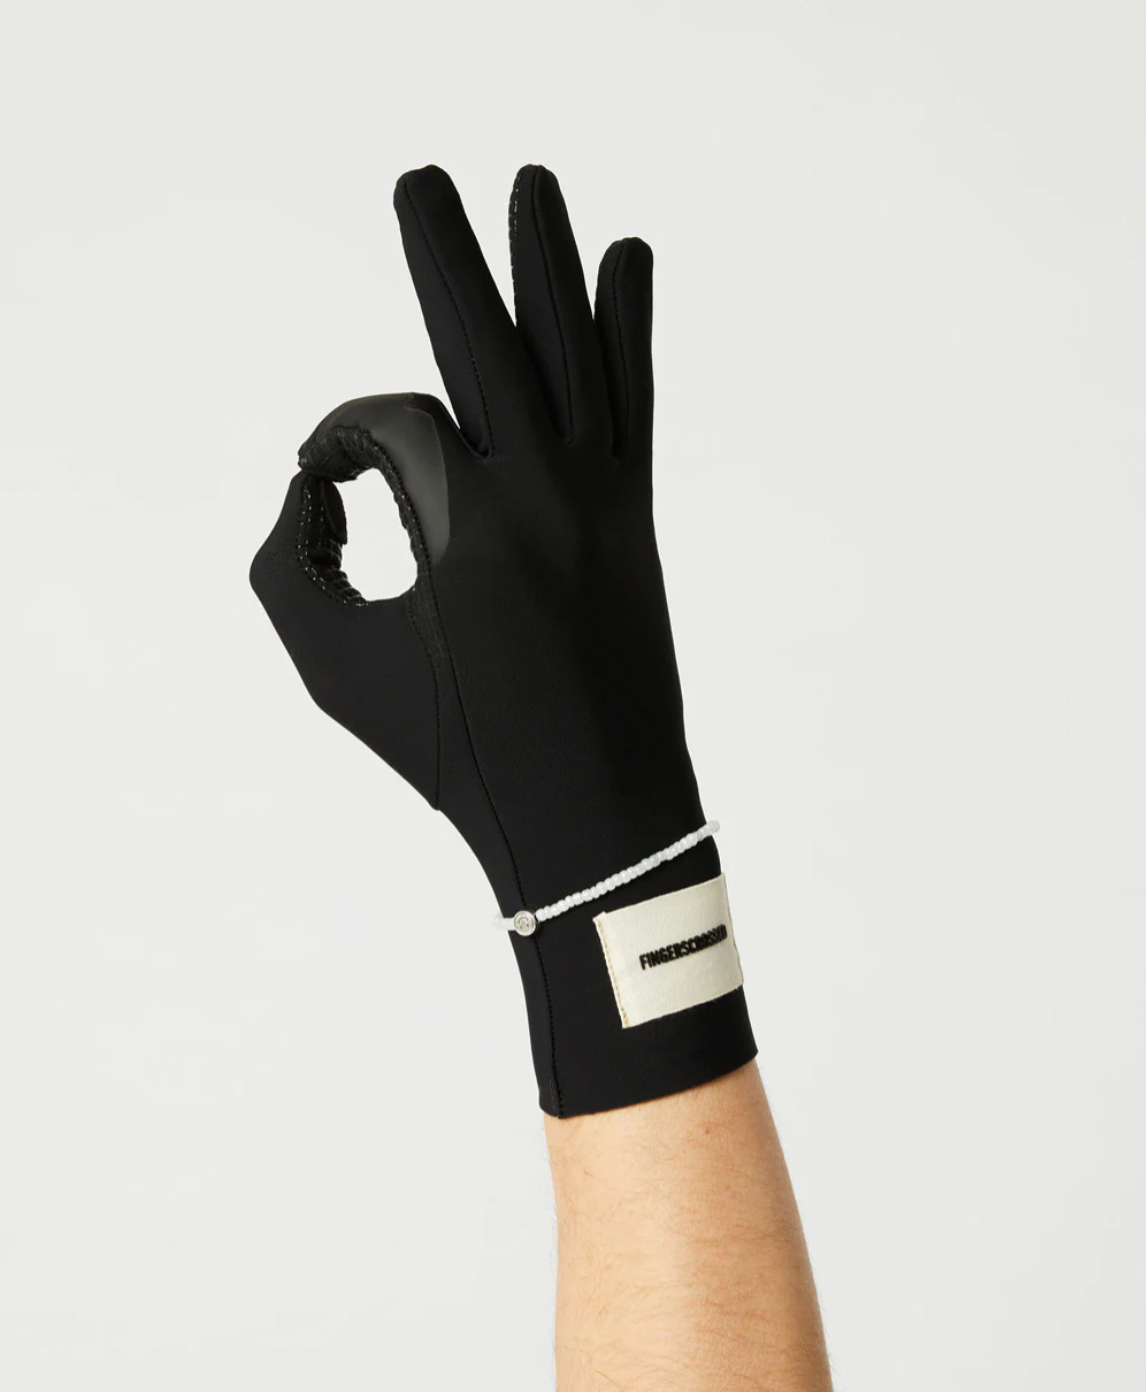 Fingerscrossed Mid season gloves ~  Black